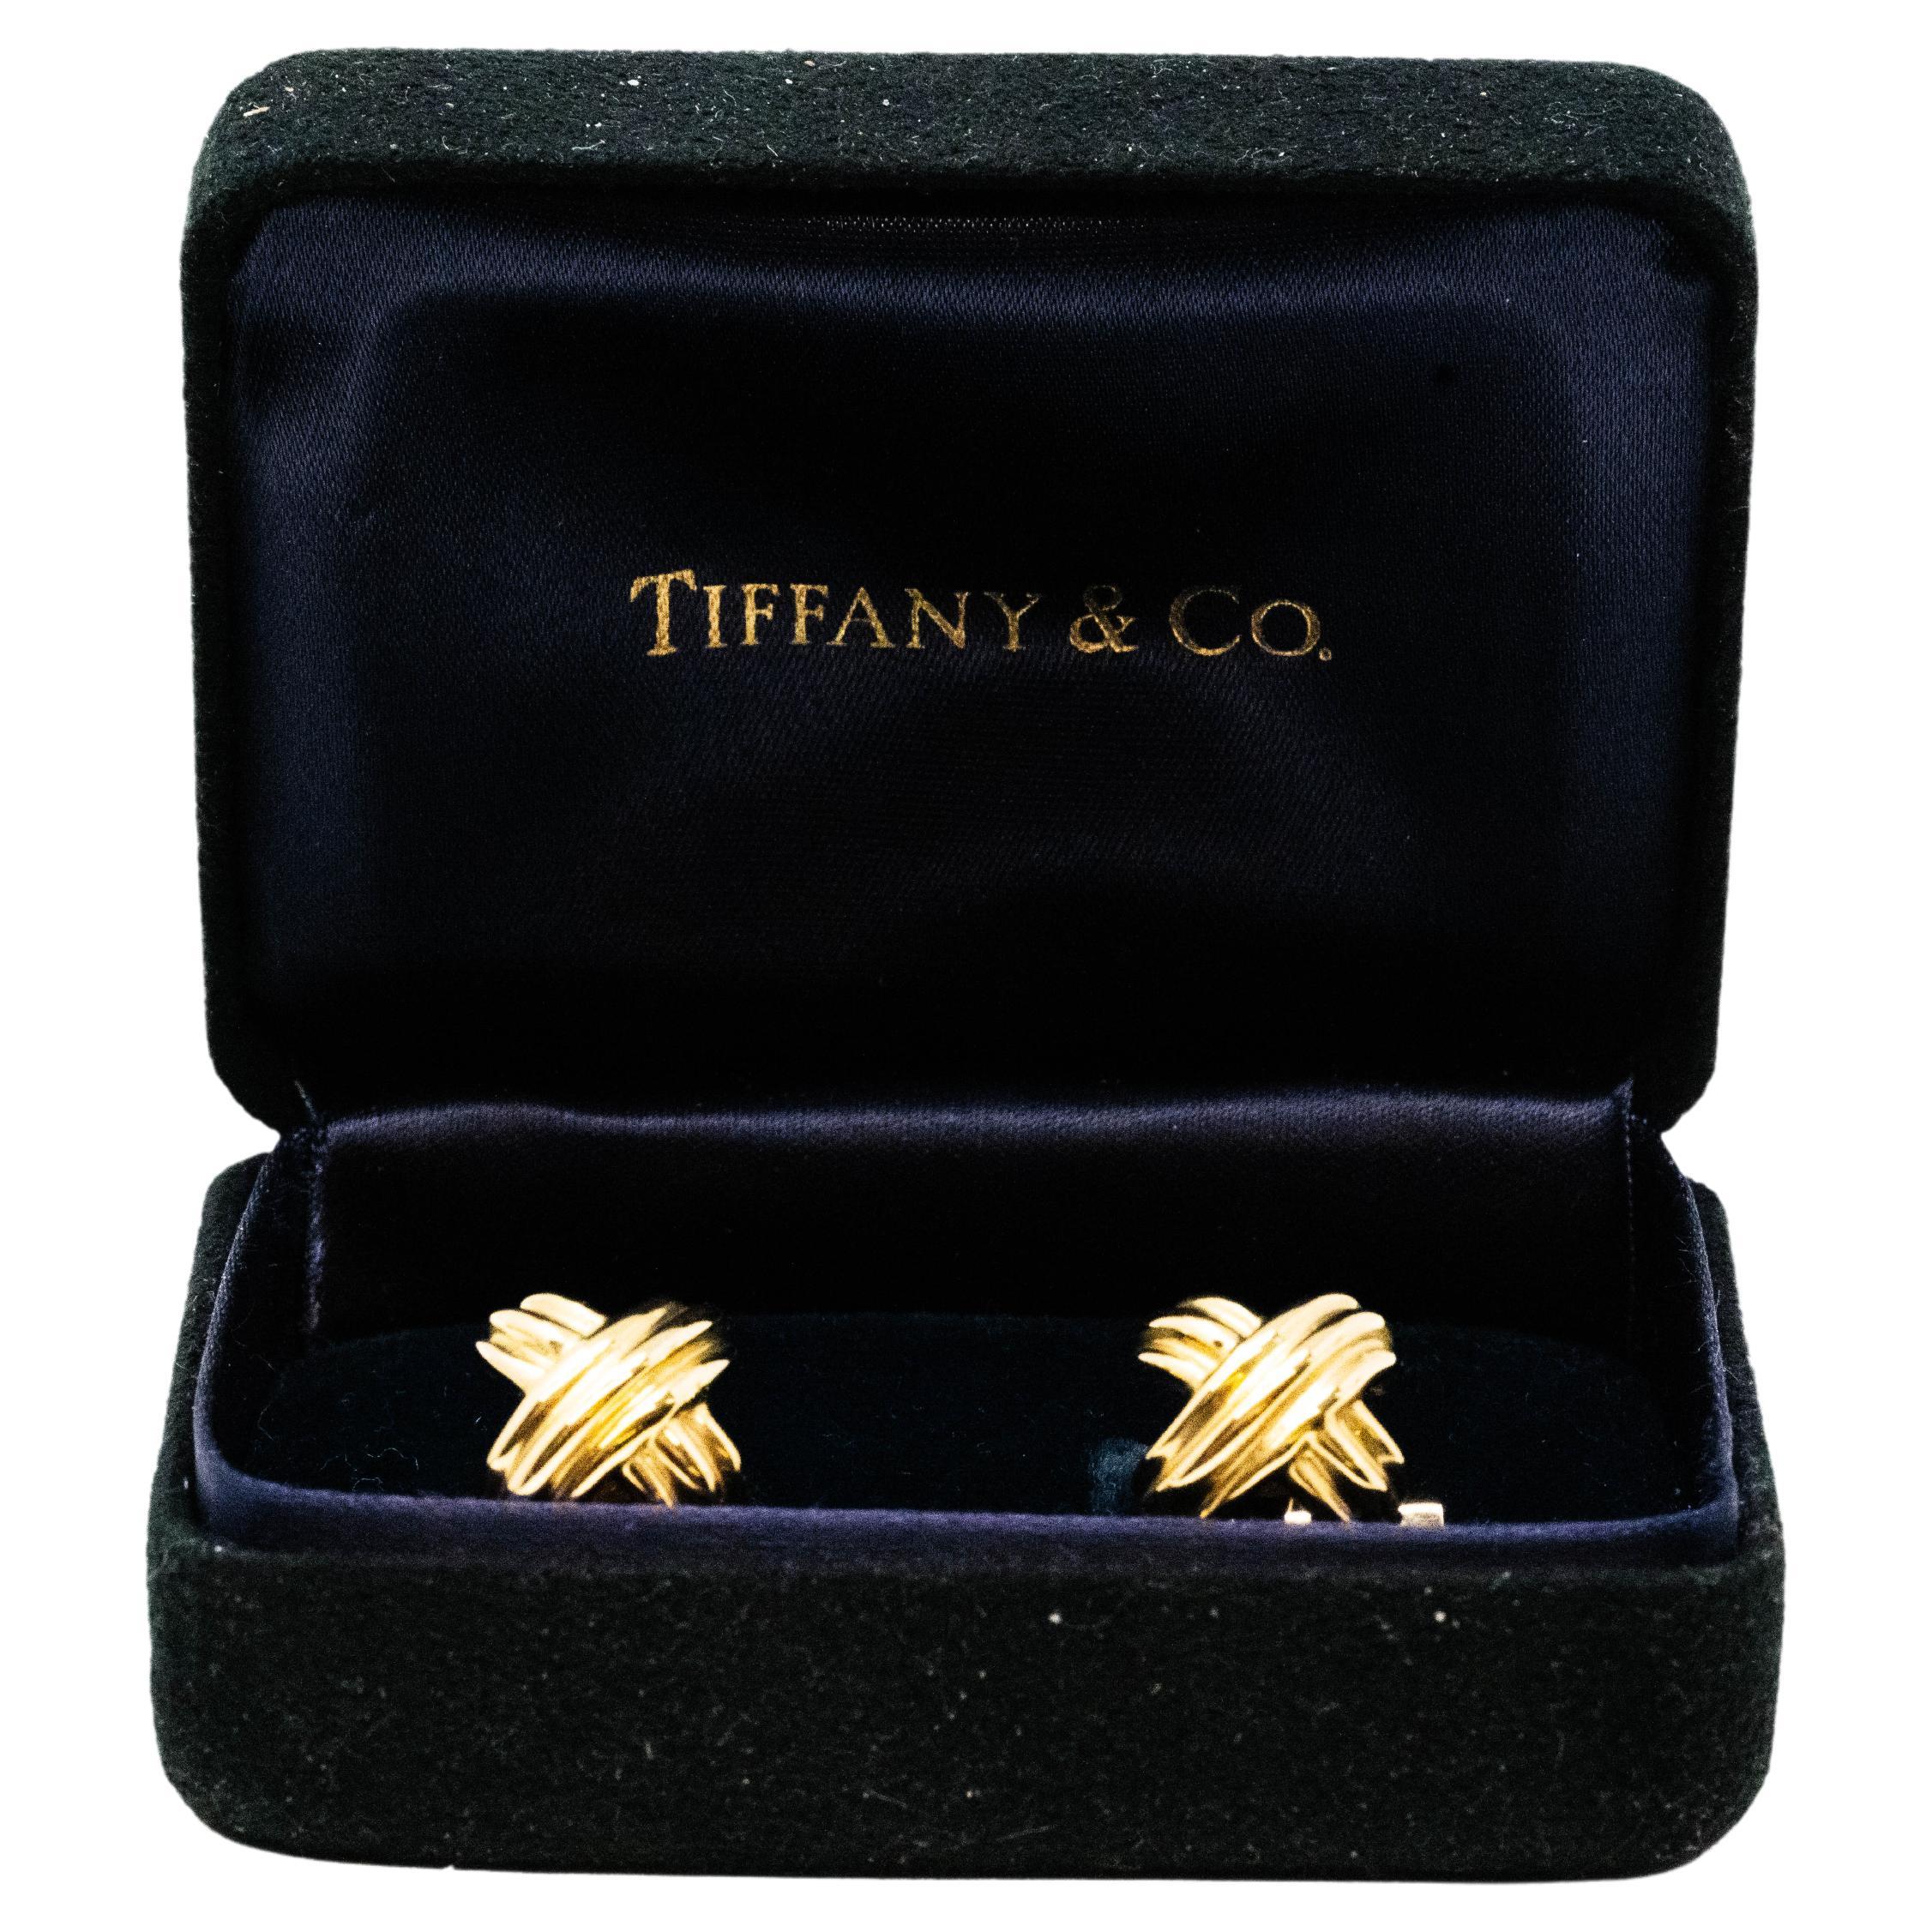 Tiffany & Co. 18k Yellow Gold Cufflinks with Box